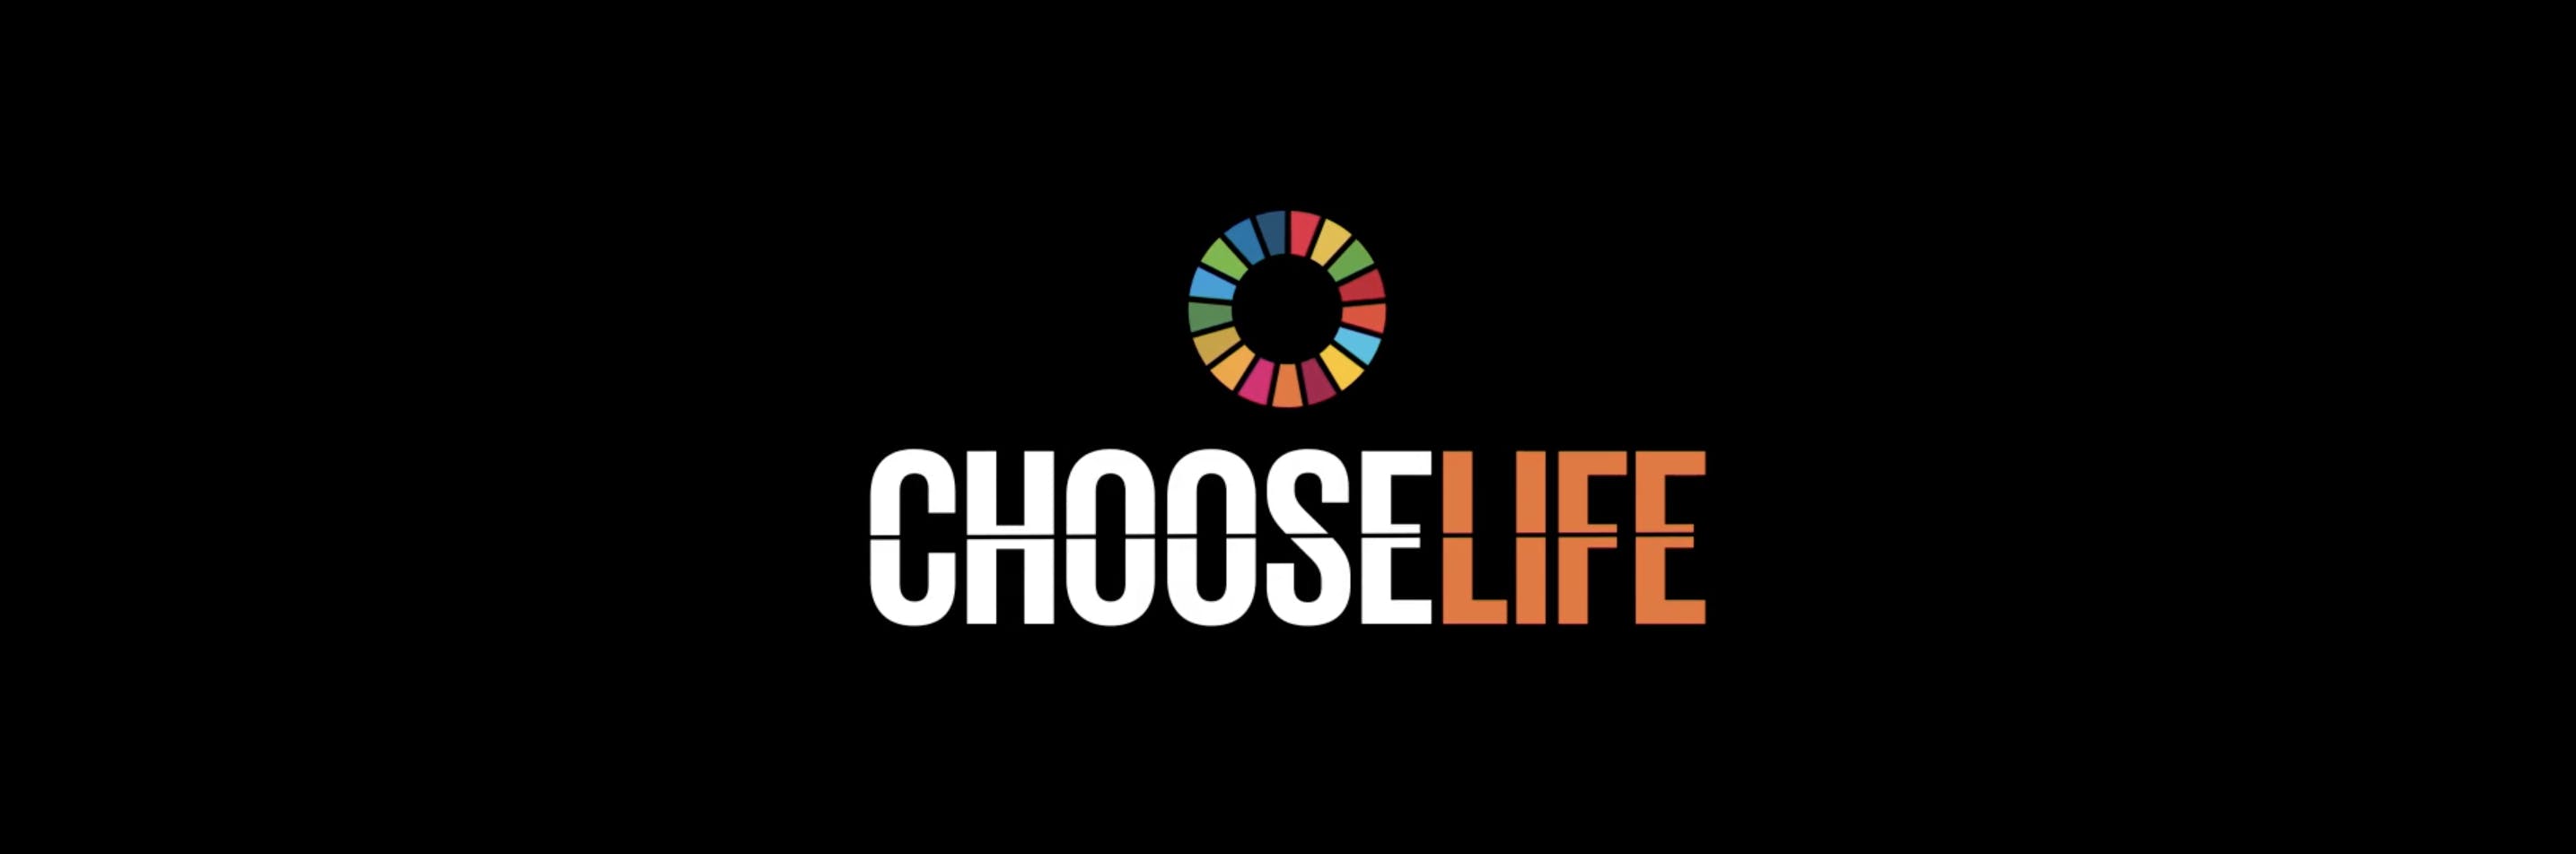 Choose Life The Global Goals